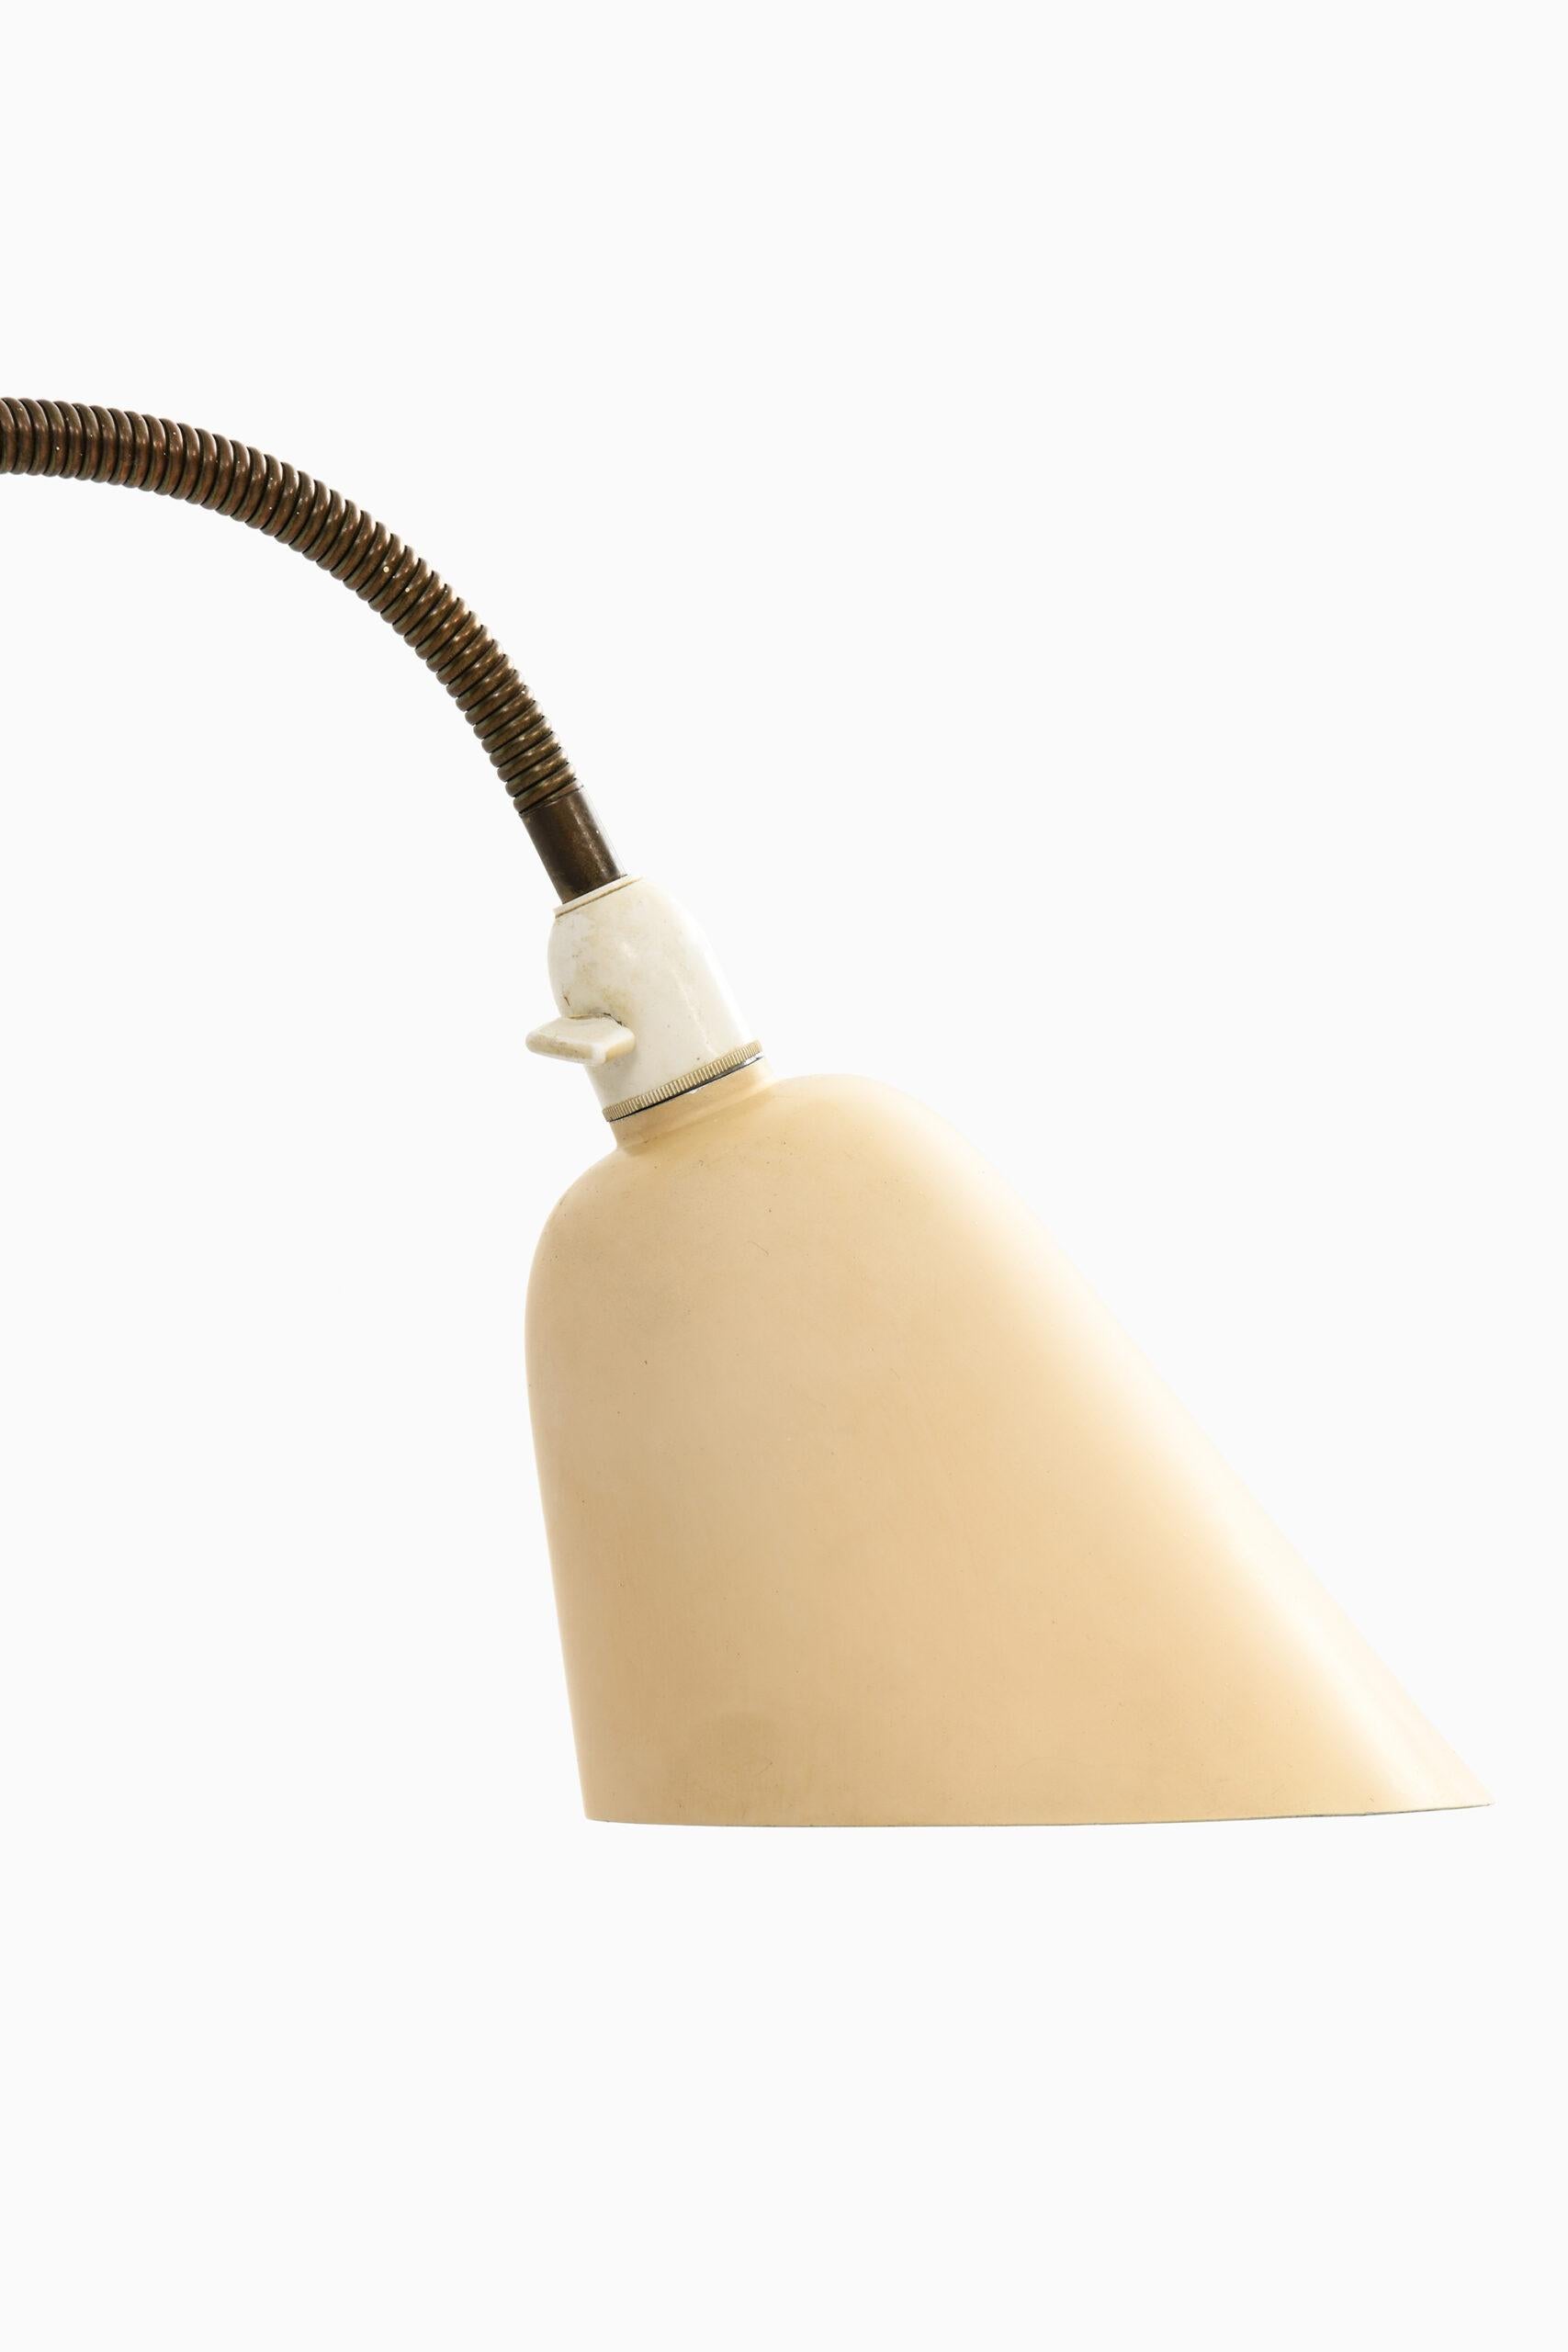 Arne Jacobsen Floor Lamp Produced by Louis Poulsen in Denmark In Good Condition For Sale In Limhamn, Skåne län